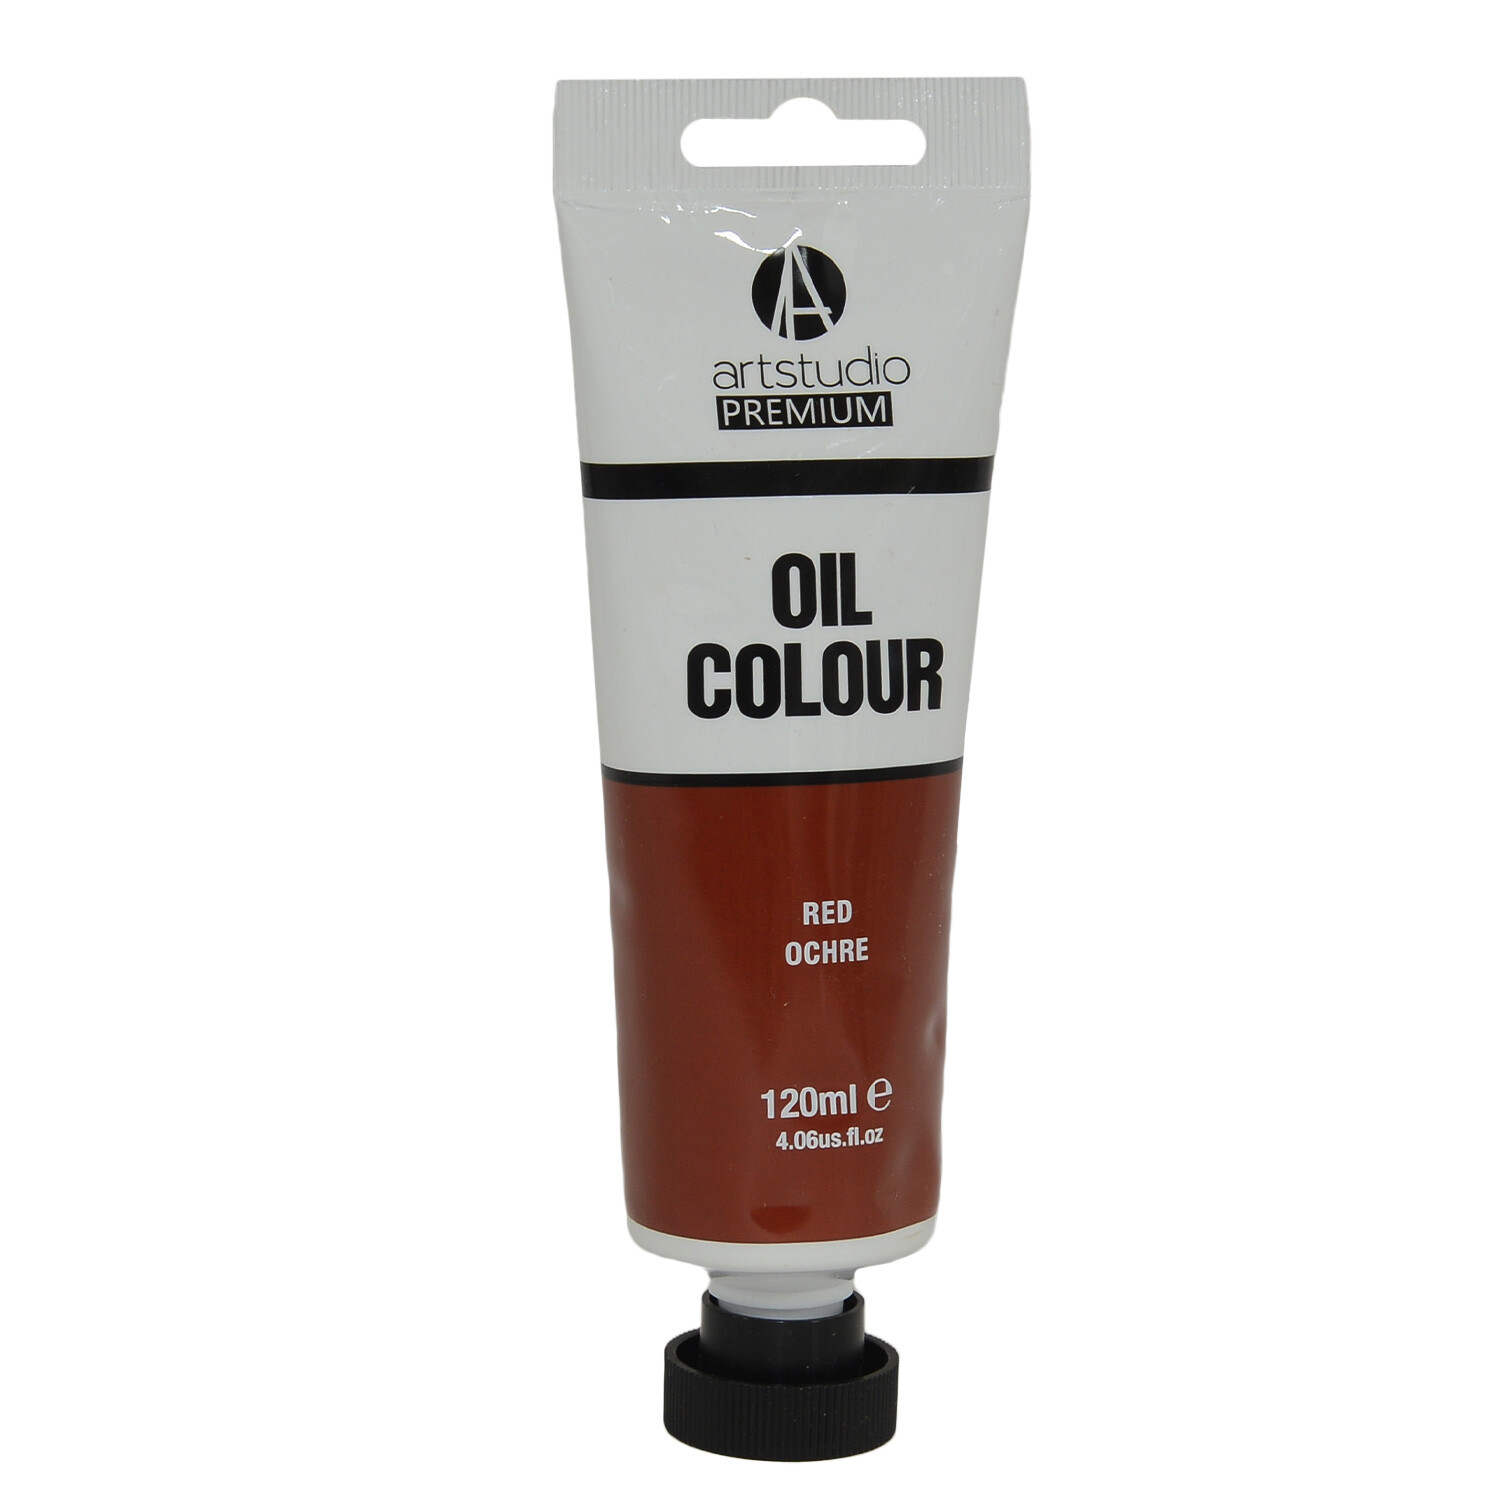 Art Studio Premium Oil Paint - Red Ochre Image